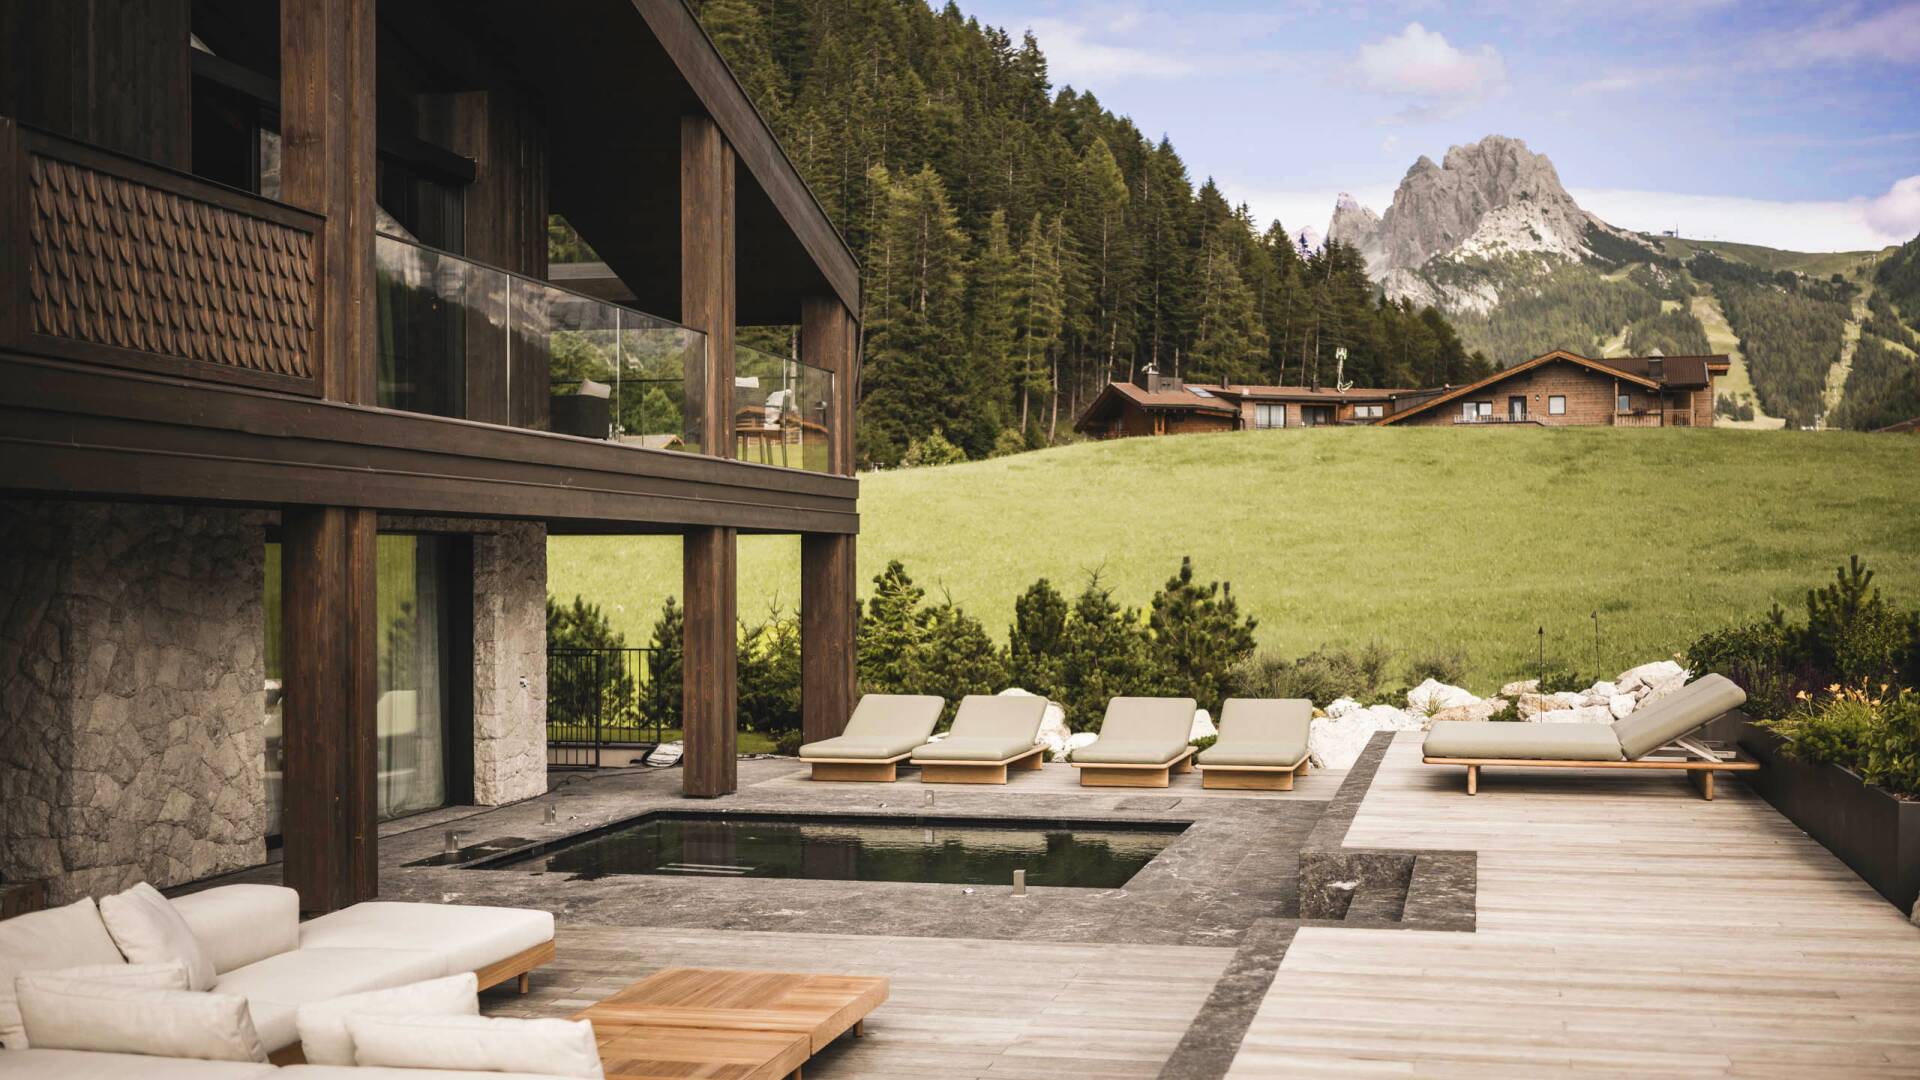 sunbathing area with alpine views